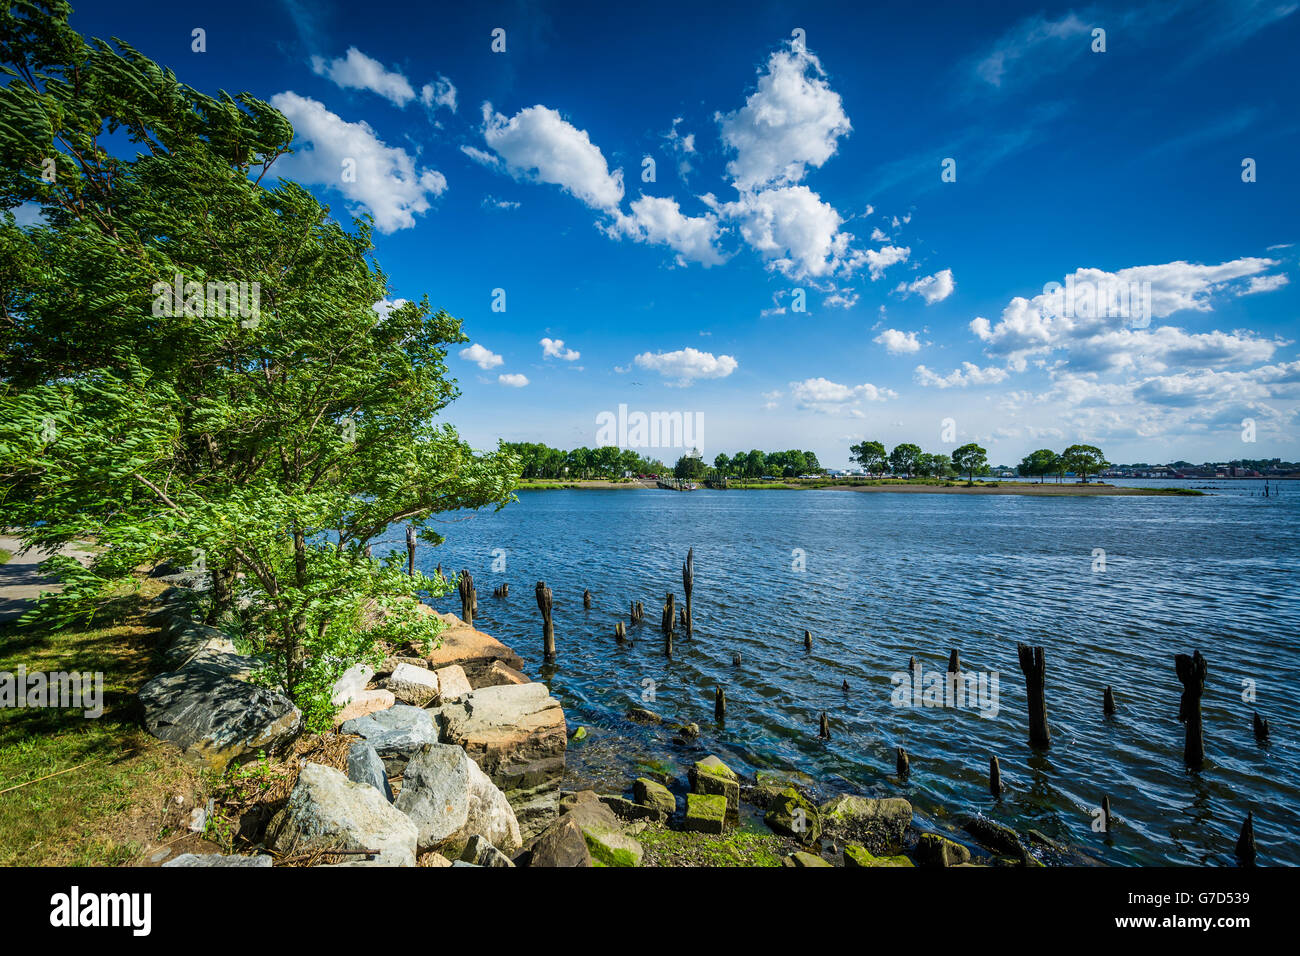 Pier pilings in the Seekonk River, in Providence, Rhode Island. Stock Photo